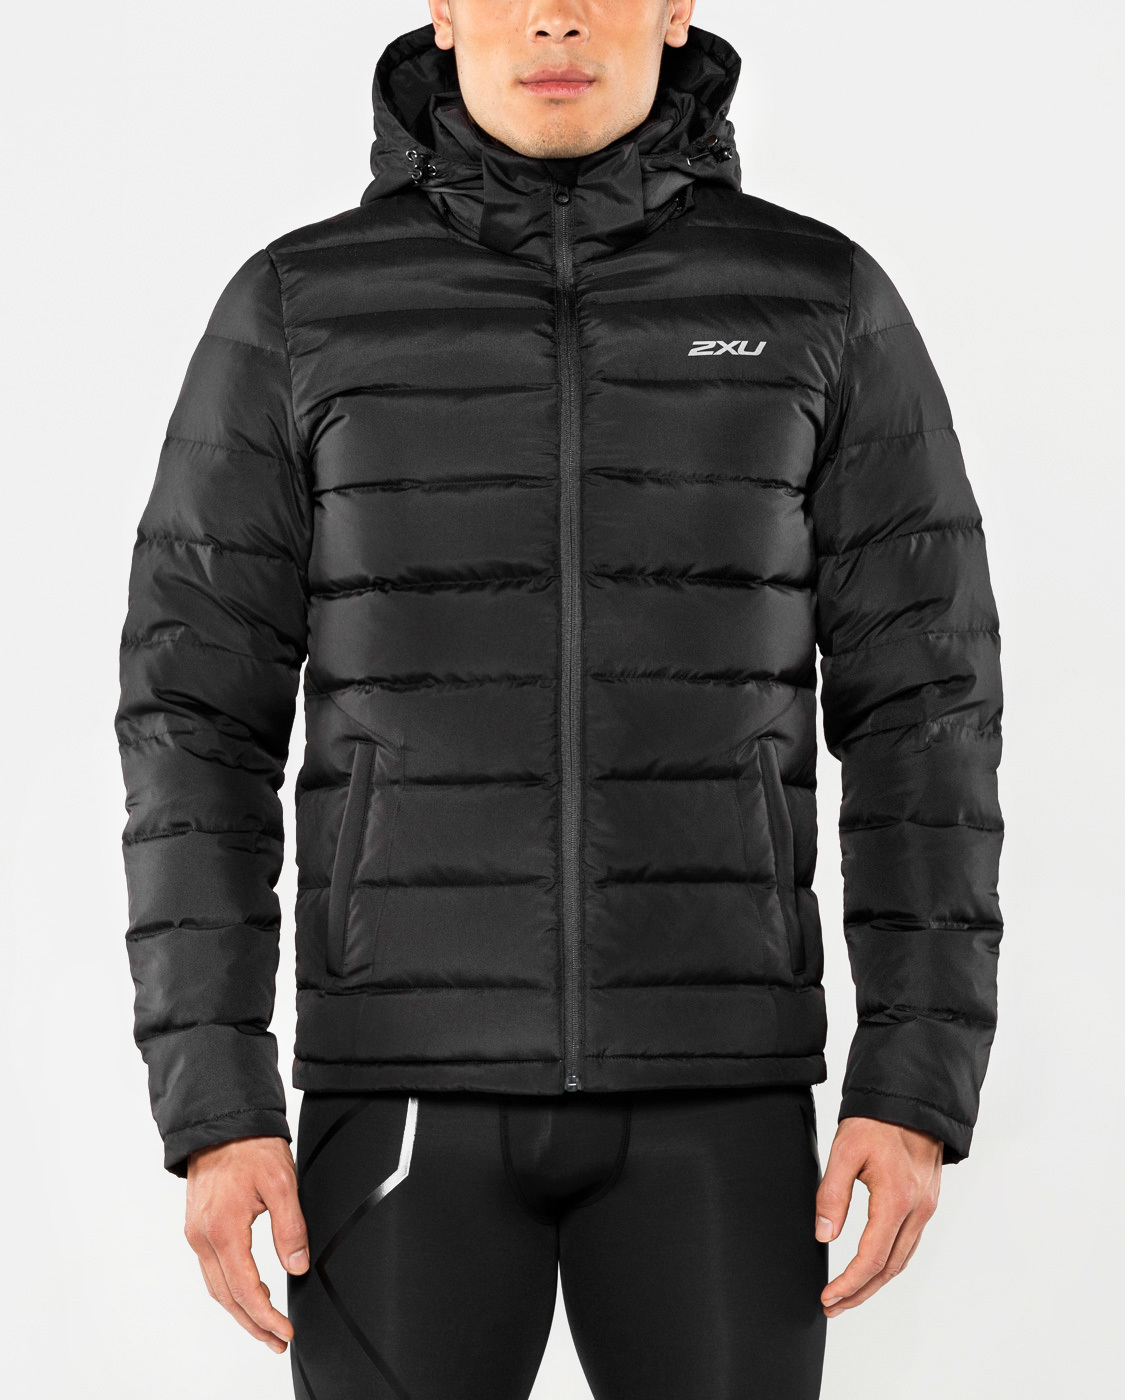 2XU - cold weather jacket men Insulation Mark II - black ...